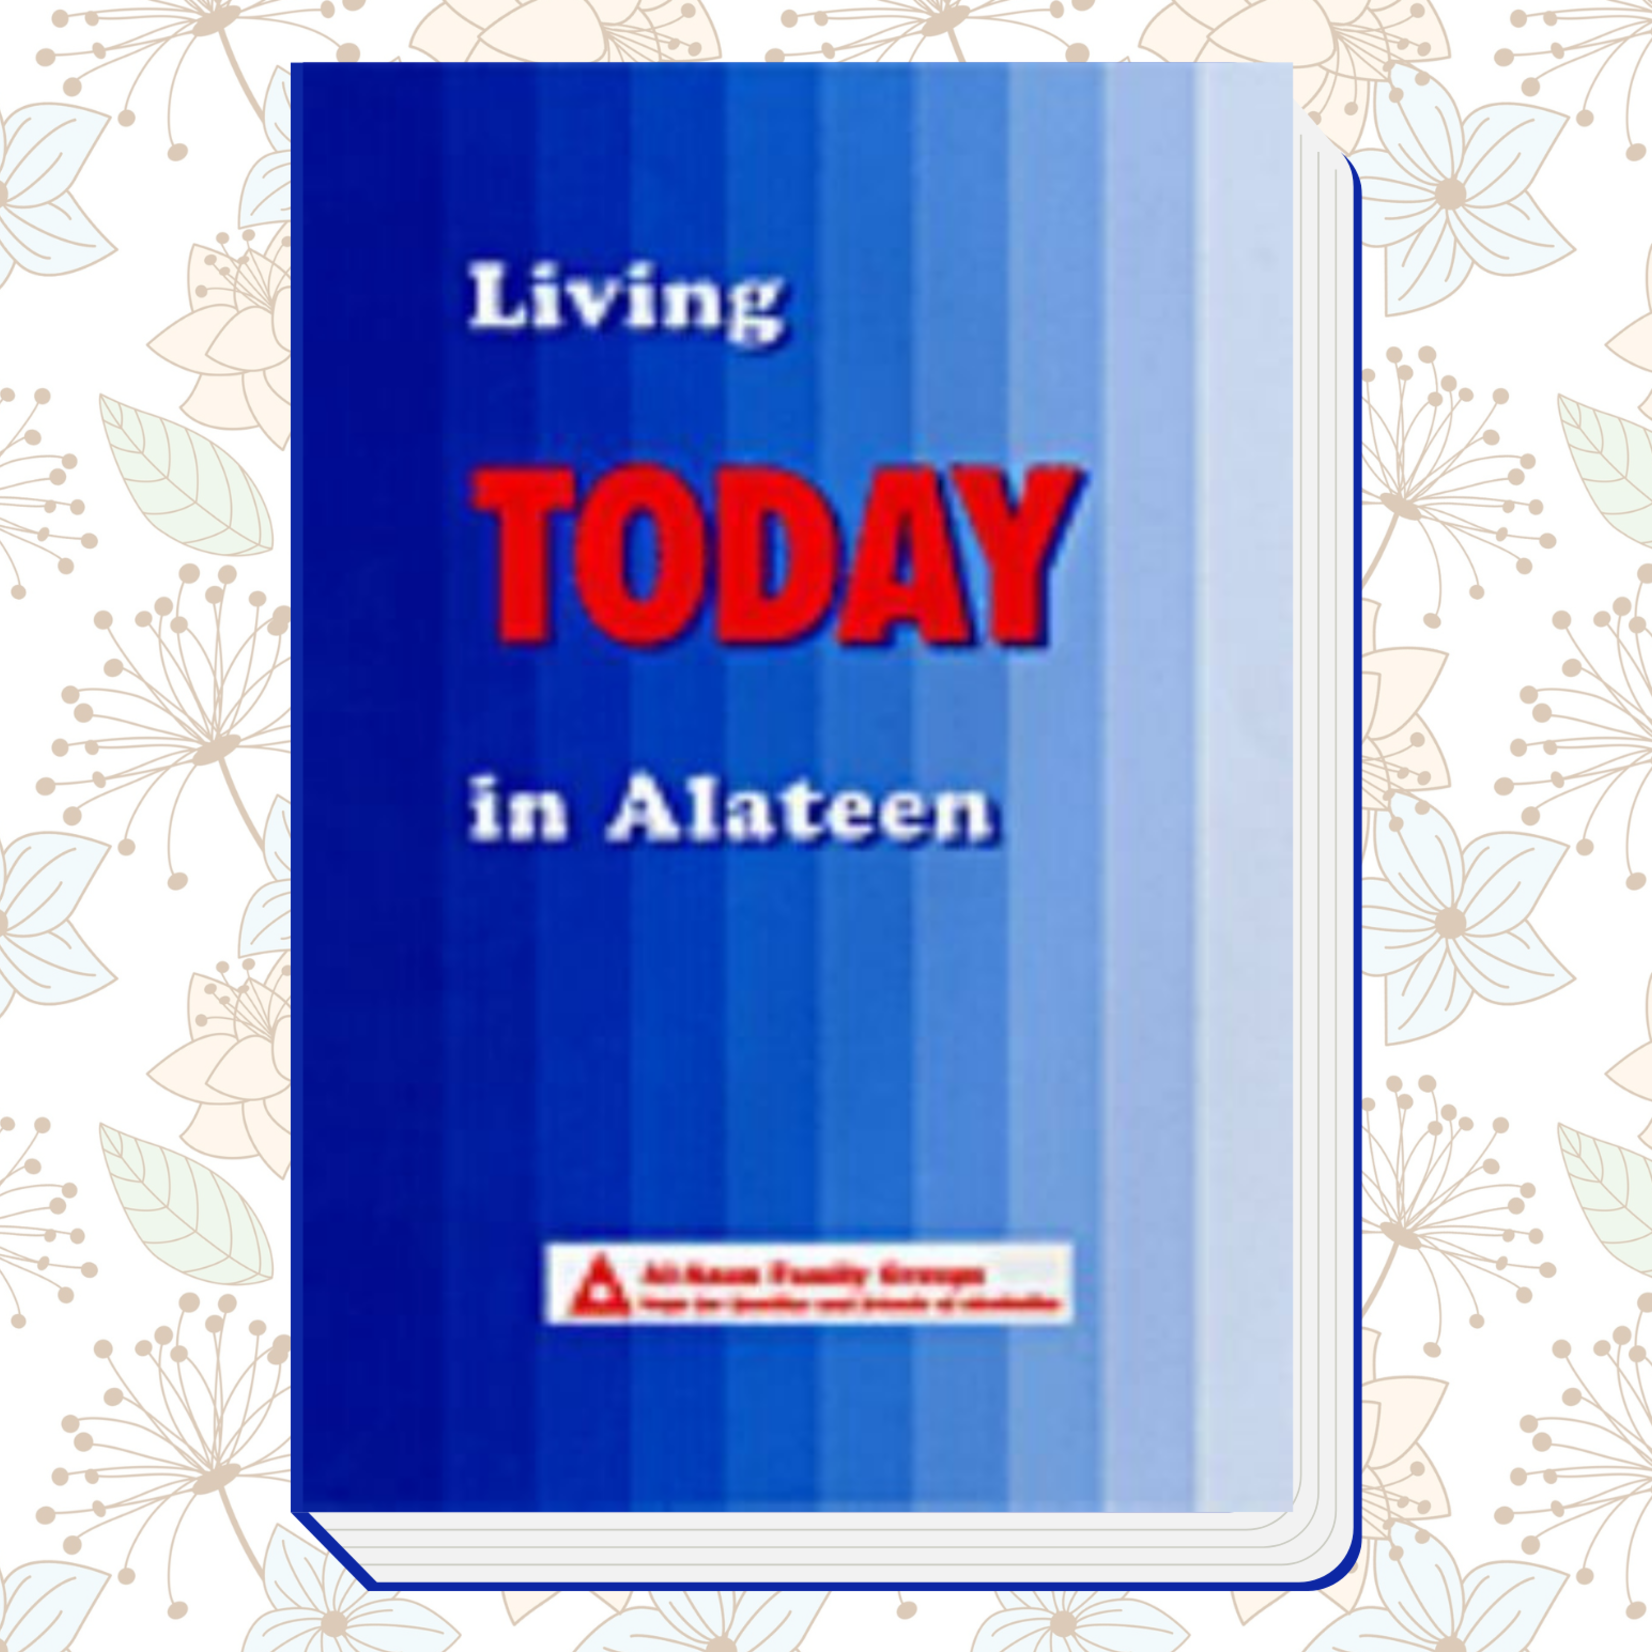 Alateen: Living Today In Alateen